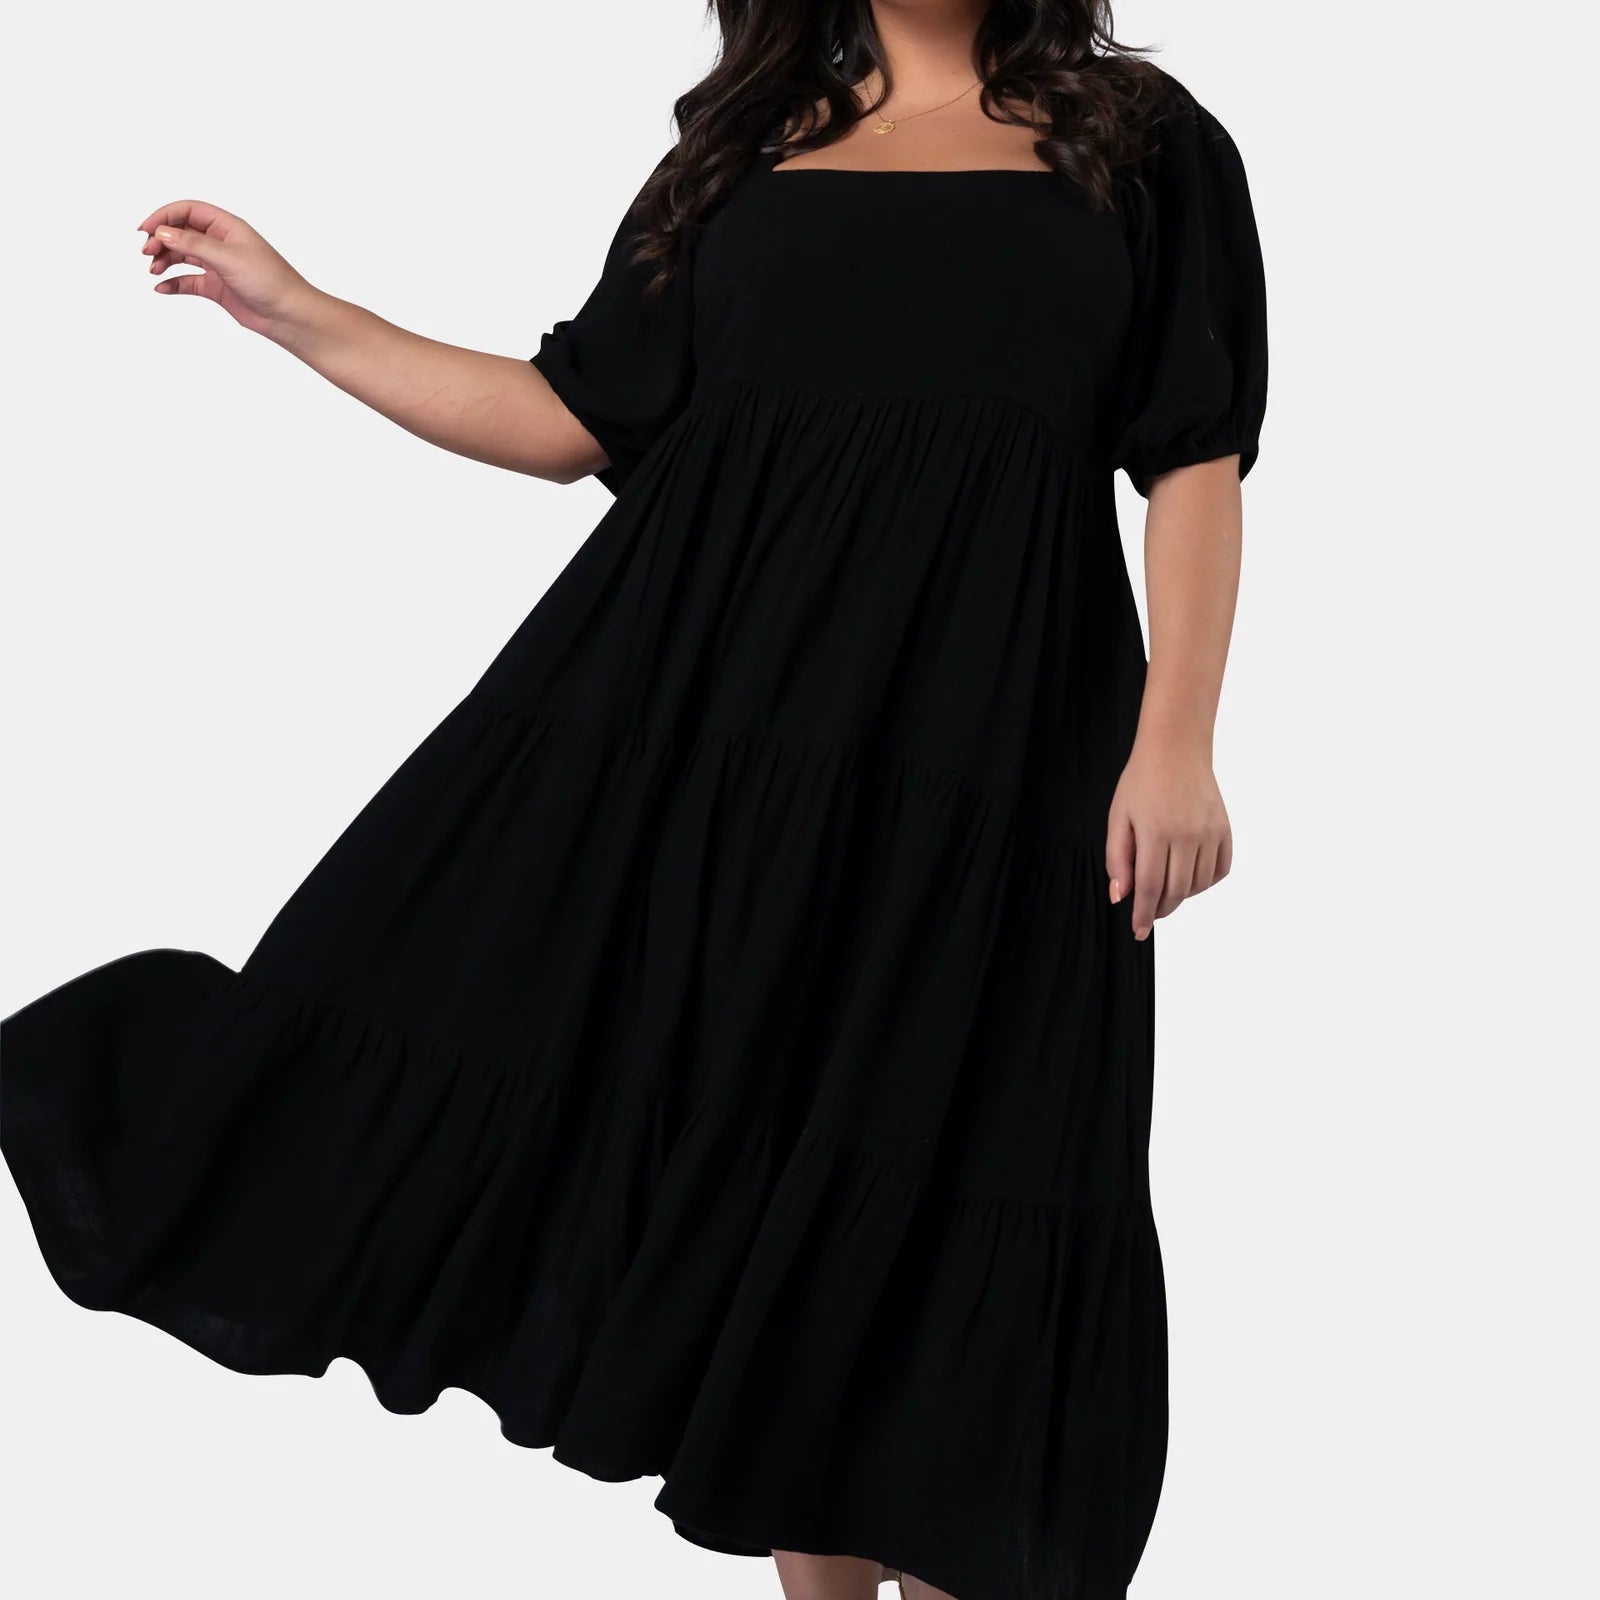 Model wearing the black isabella dress